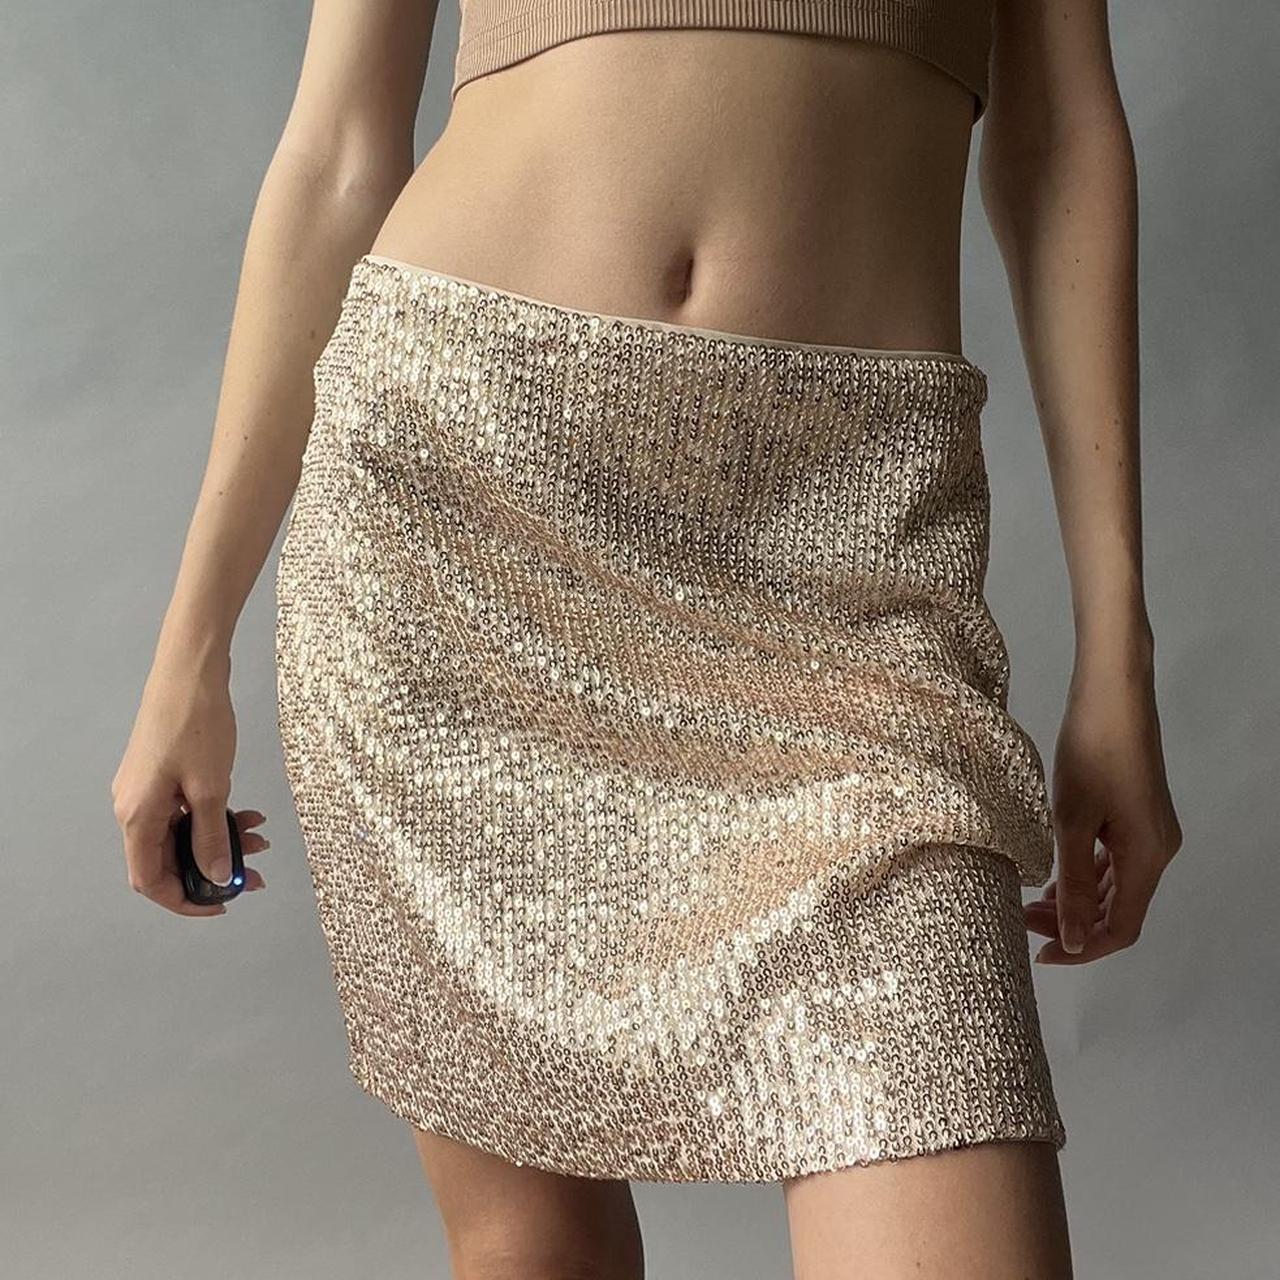 Guizio Women's Sequined Miniskirt